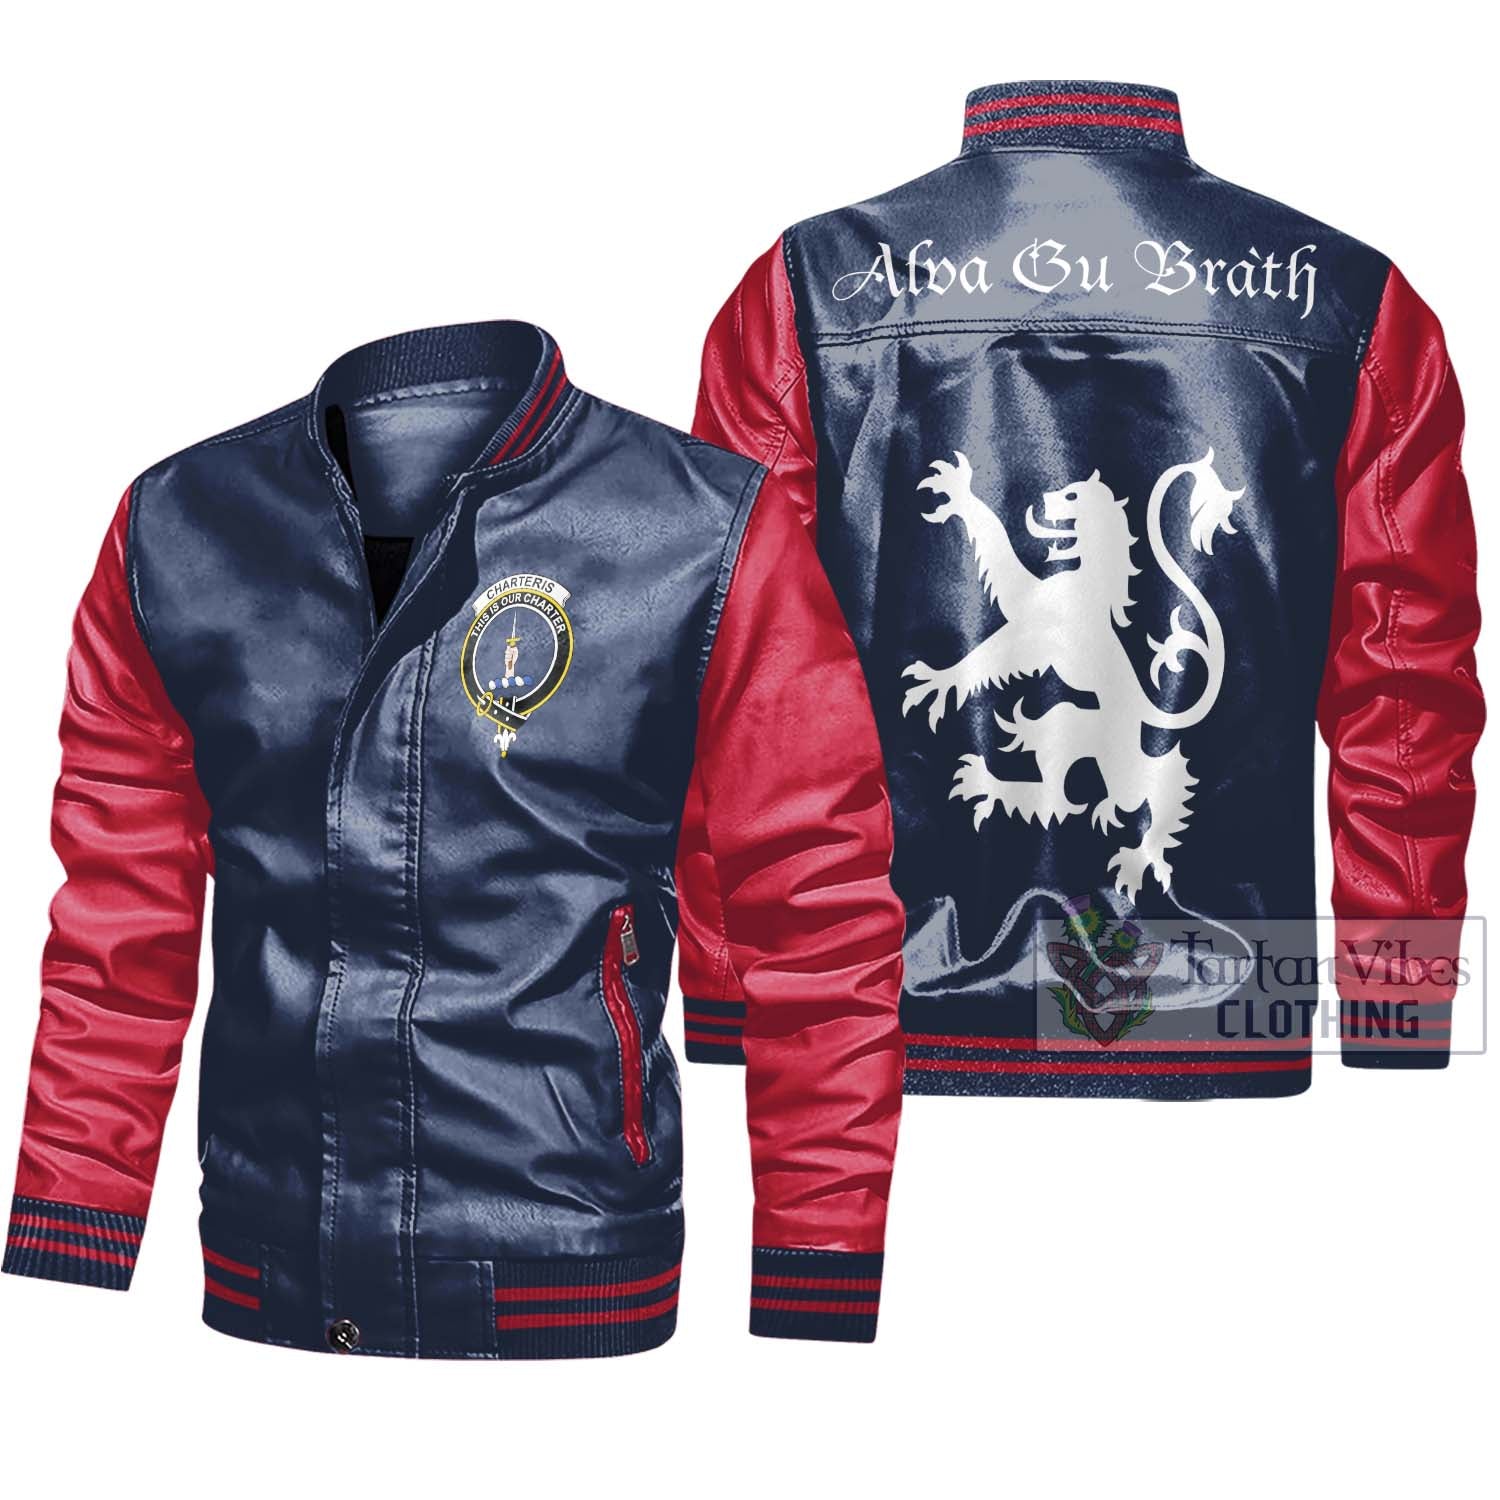 Tartan Vibes Clothing Charteris Family Crest Leather Bomber Jacket Lion Rampant Alba Gu Brath Style